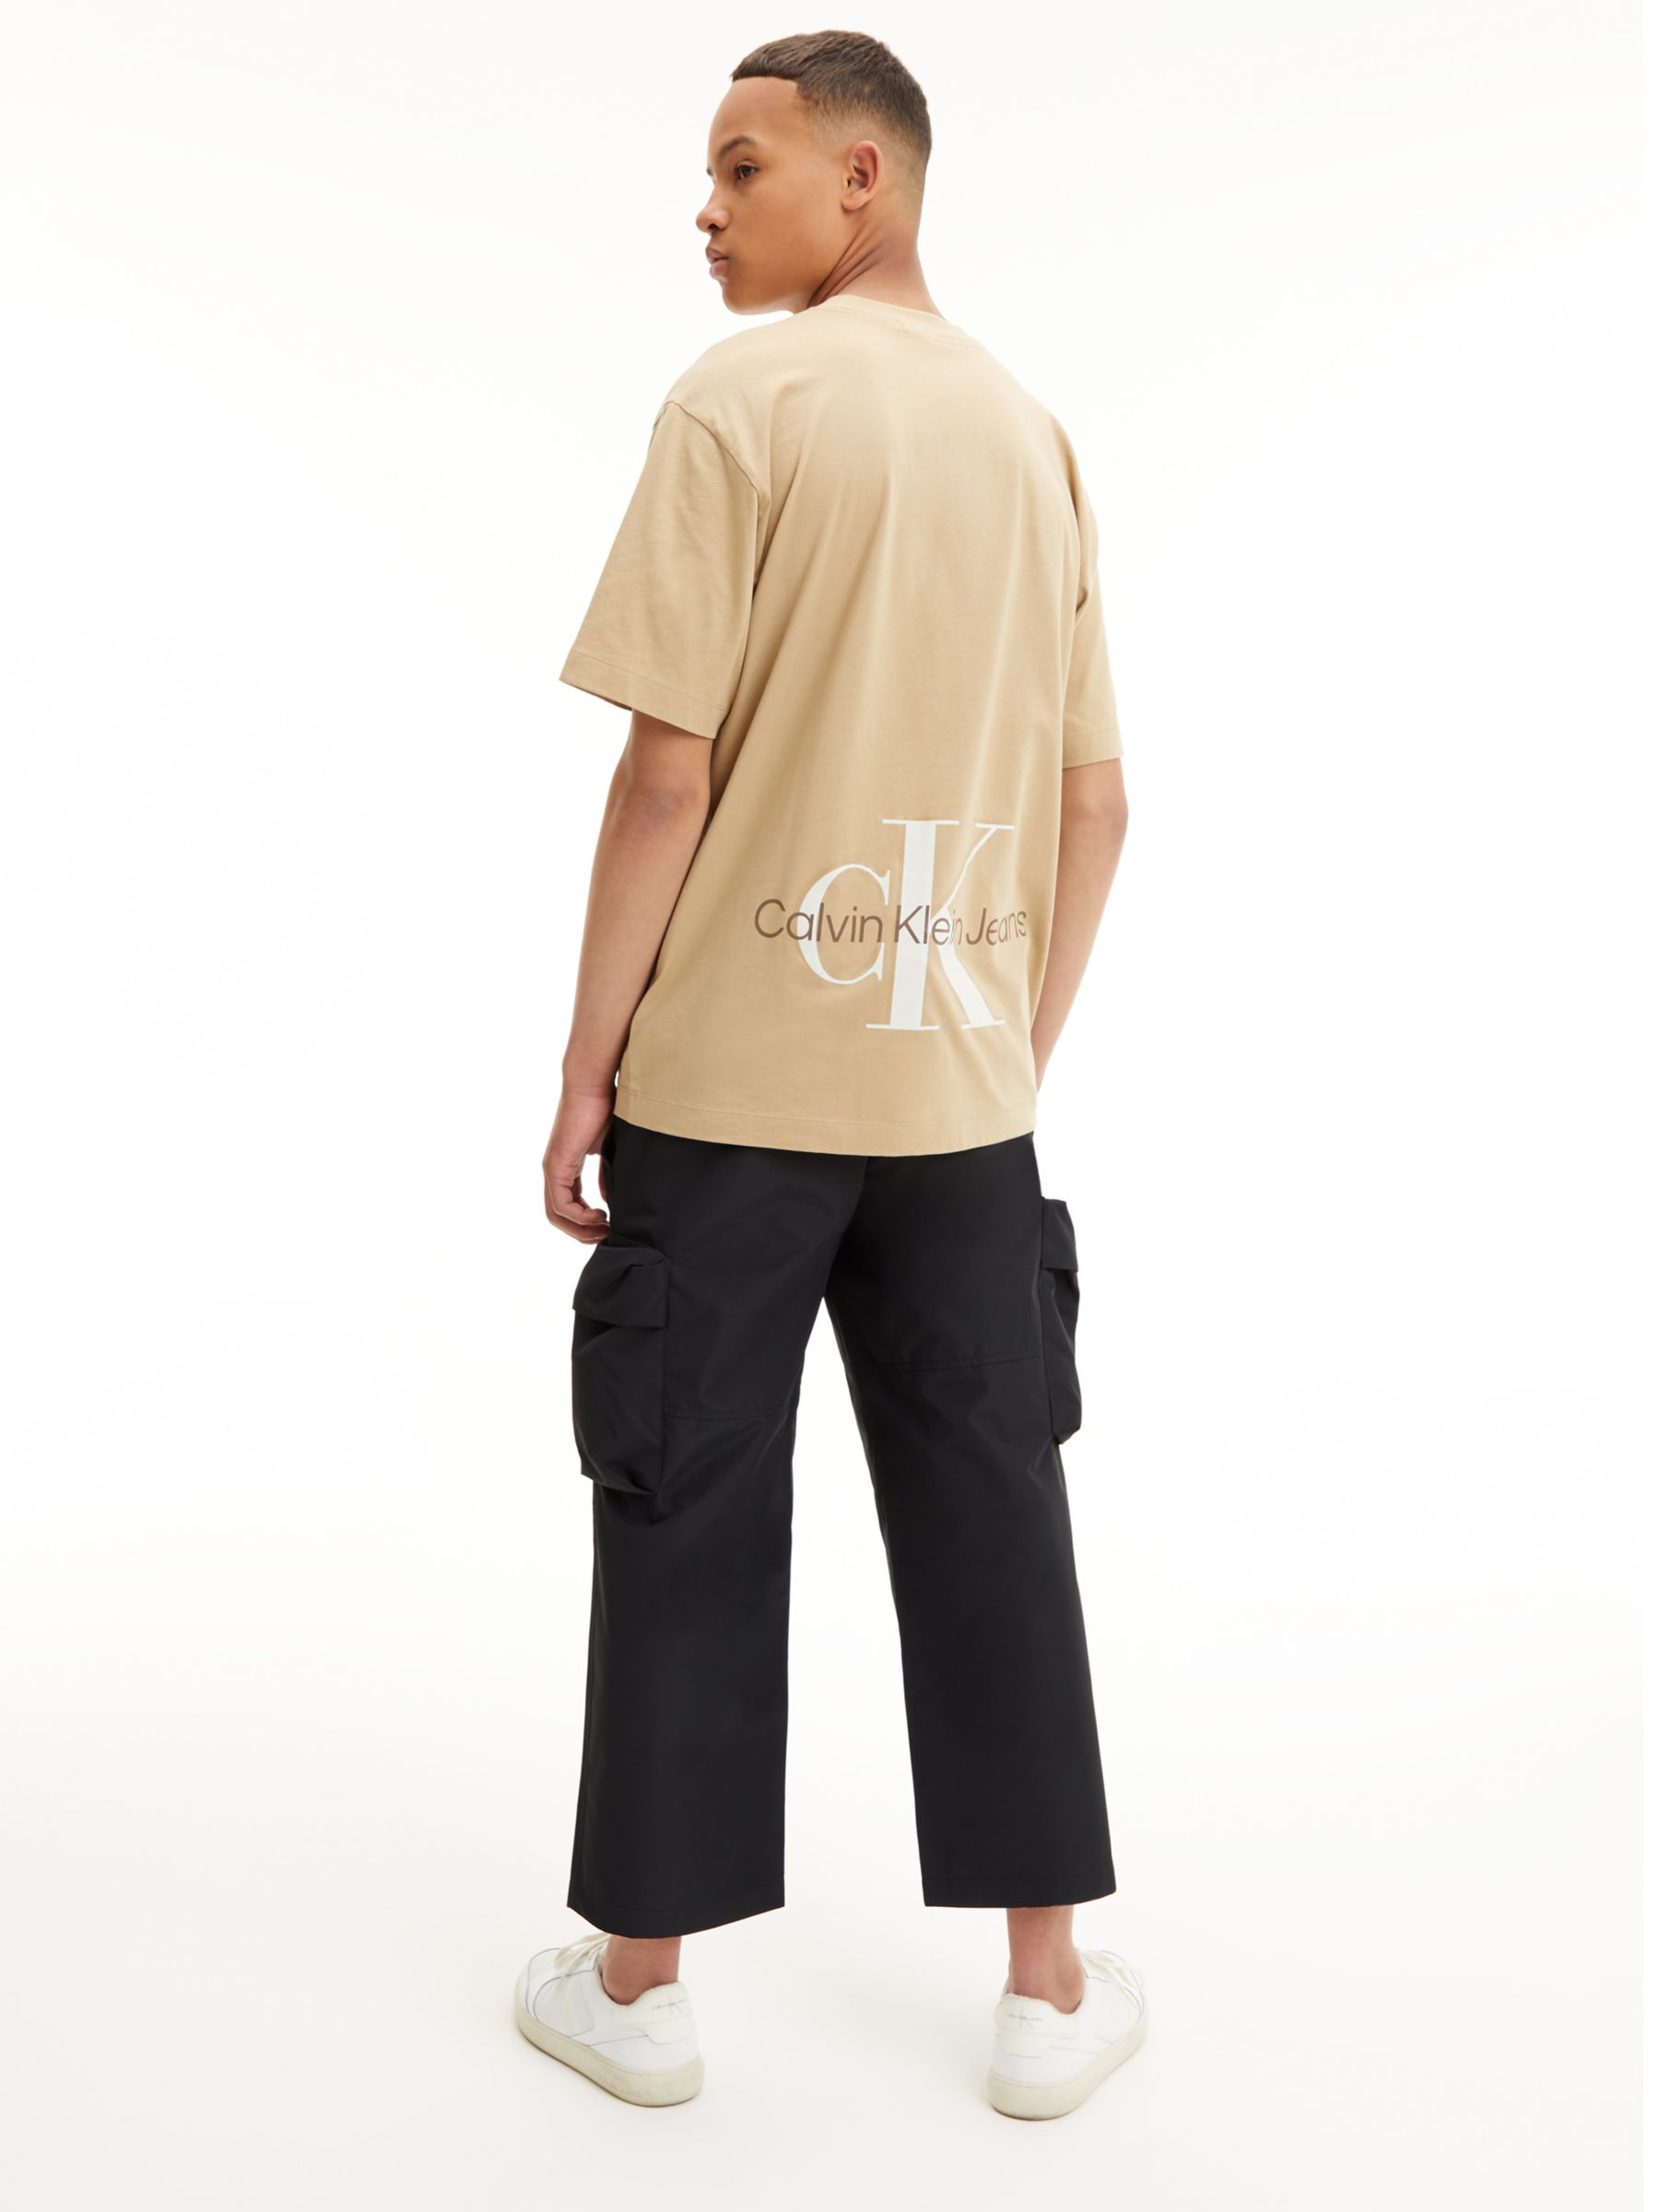 Men's T-Shirts - Men's T-Shirts, Calvin Klein